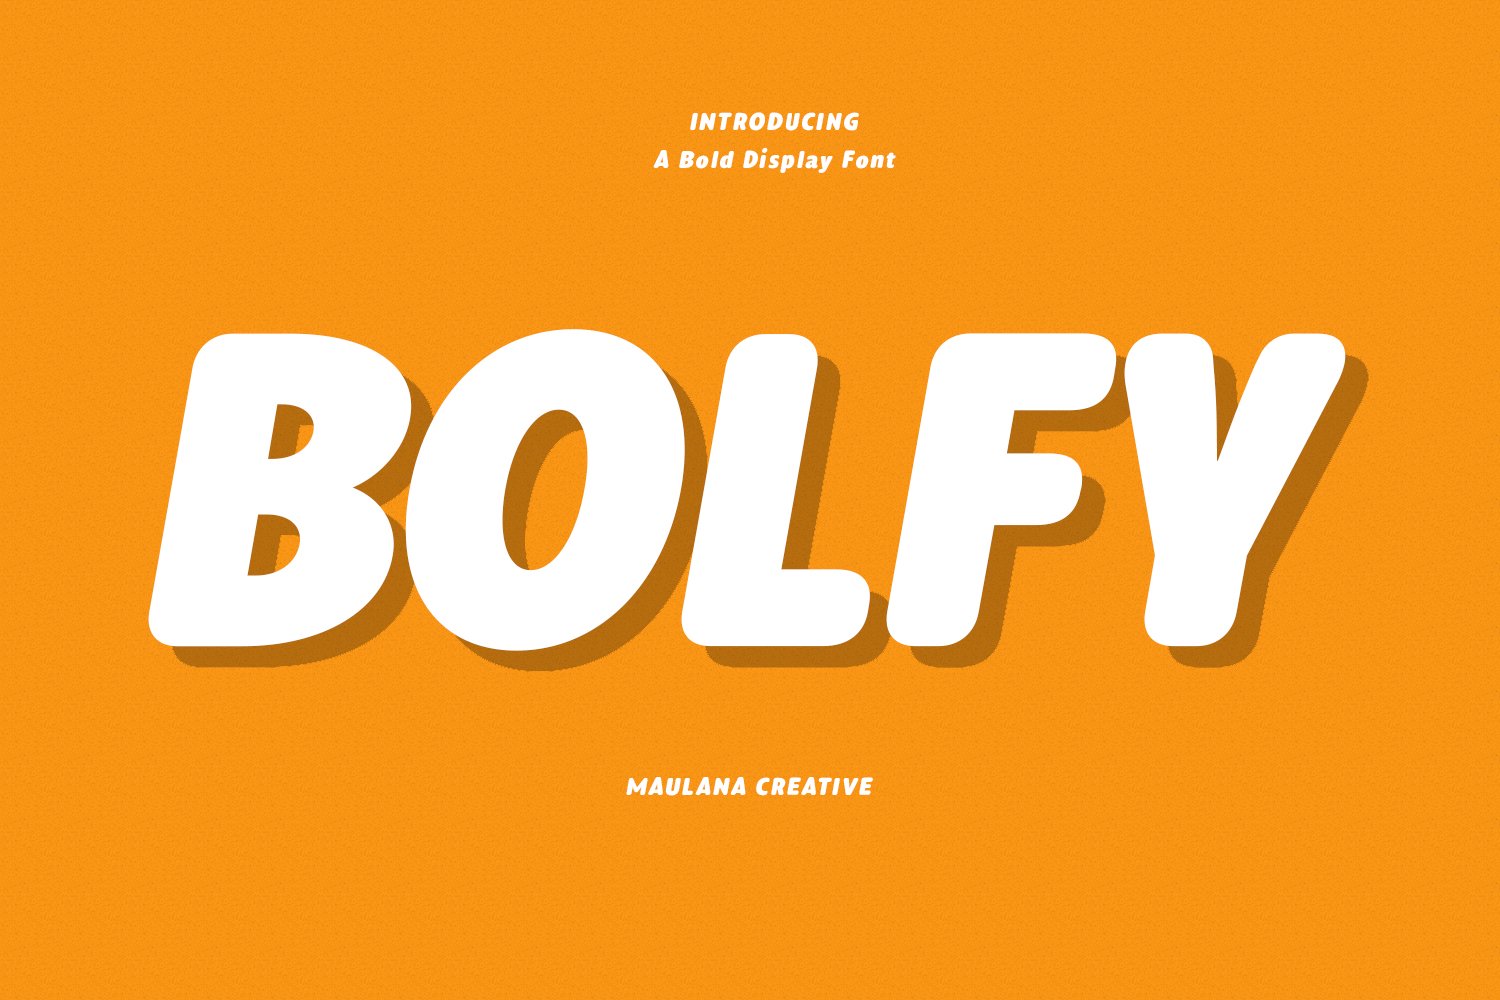 Bolfy Handwritten Display Font cover image.